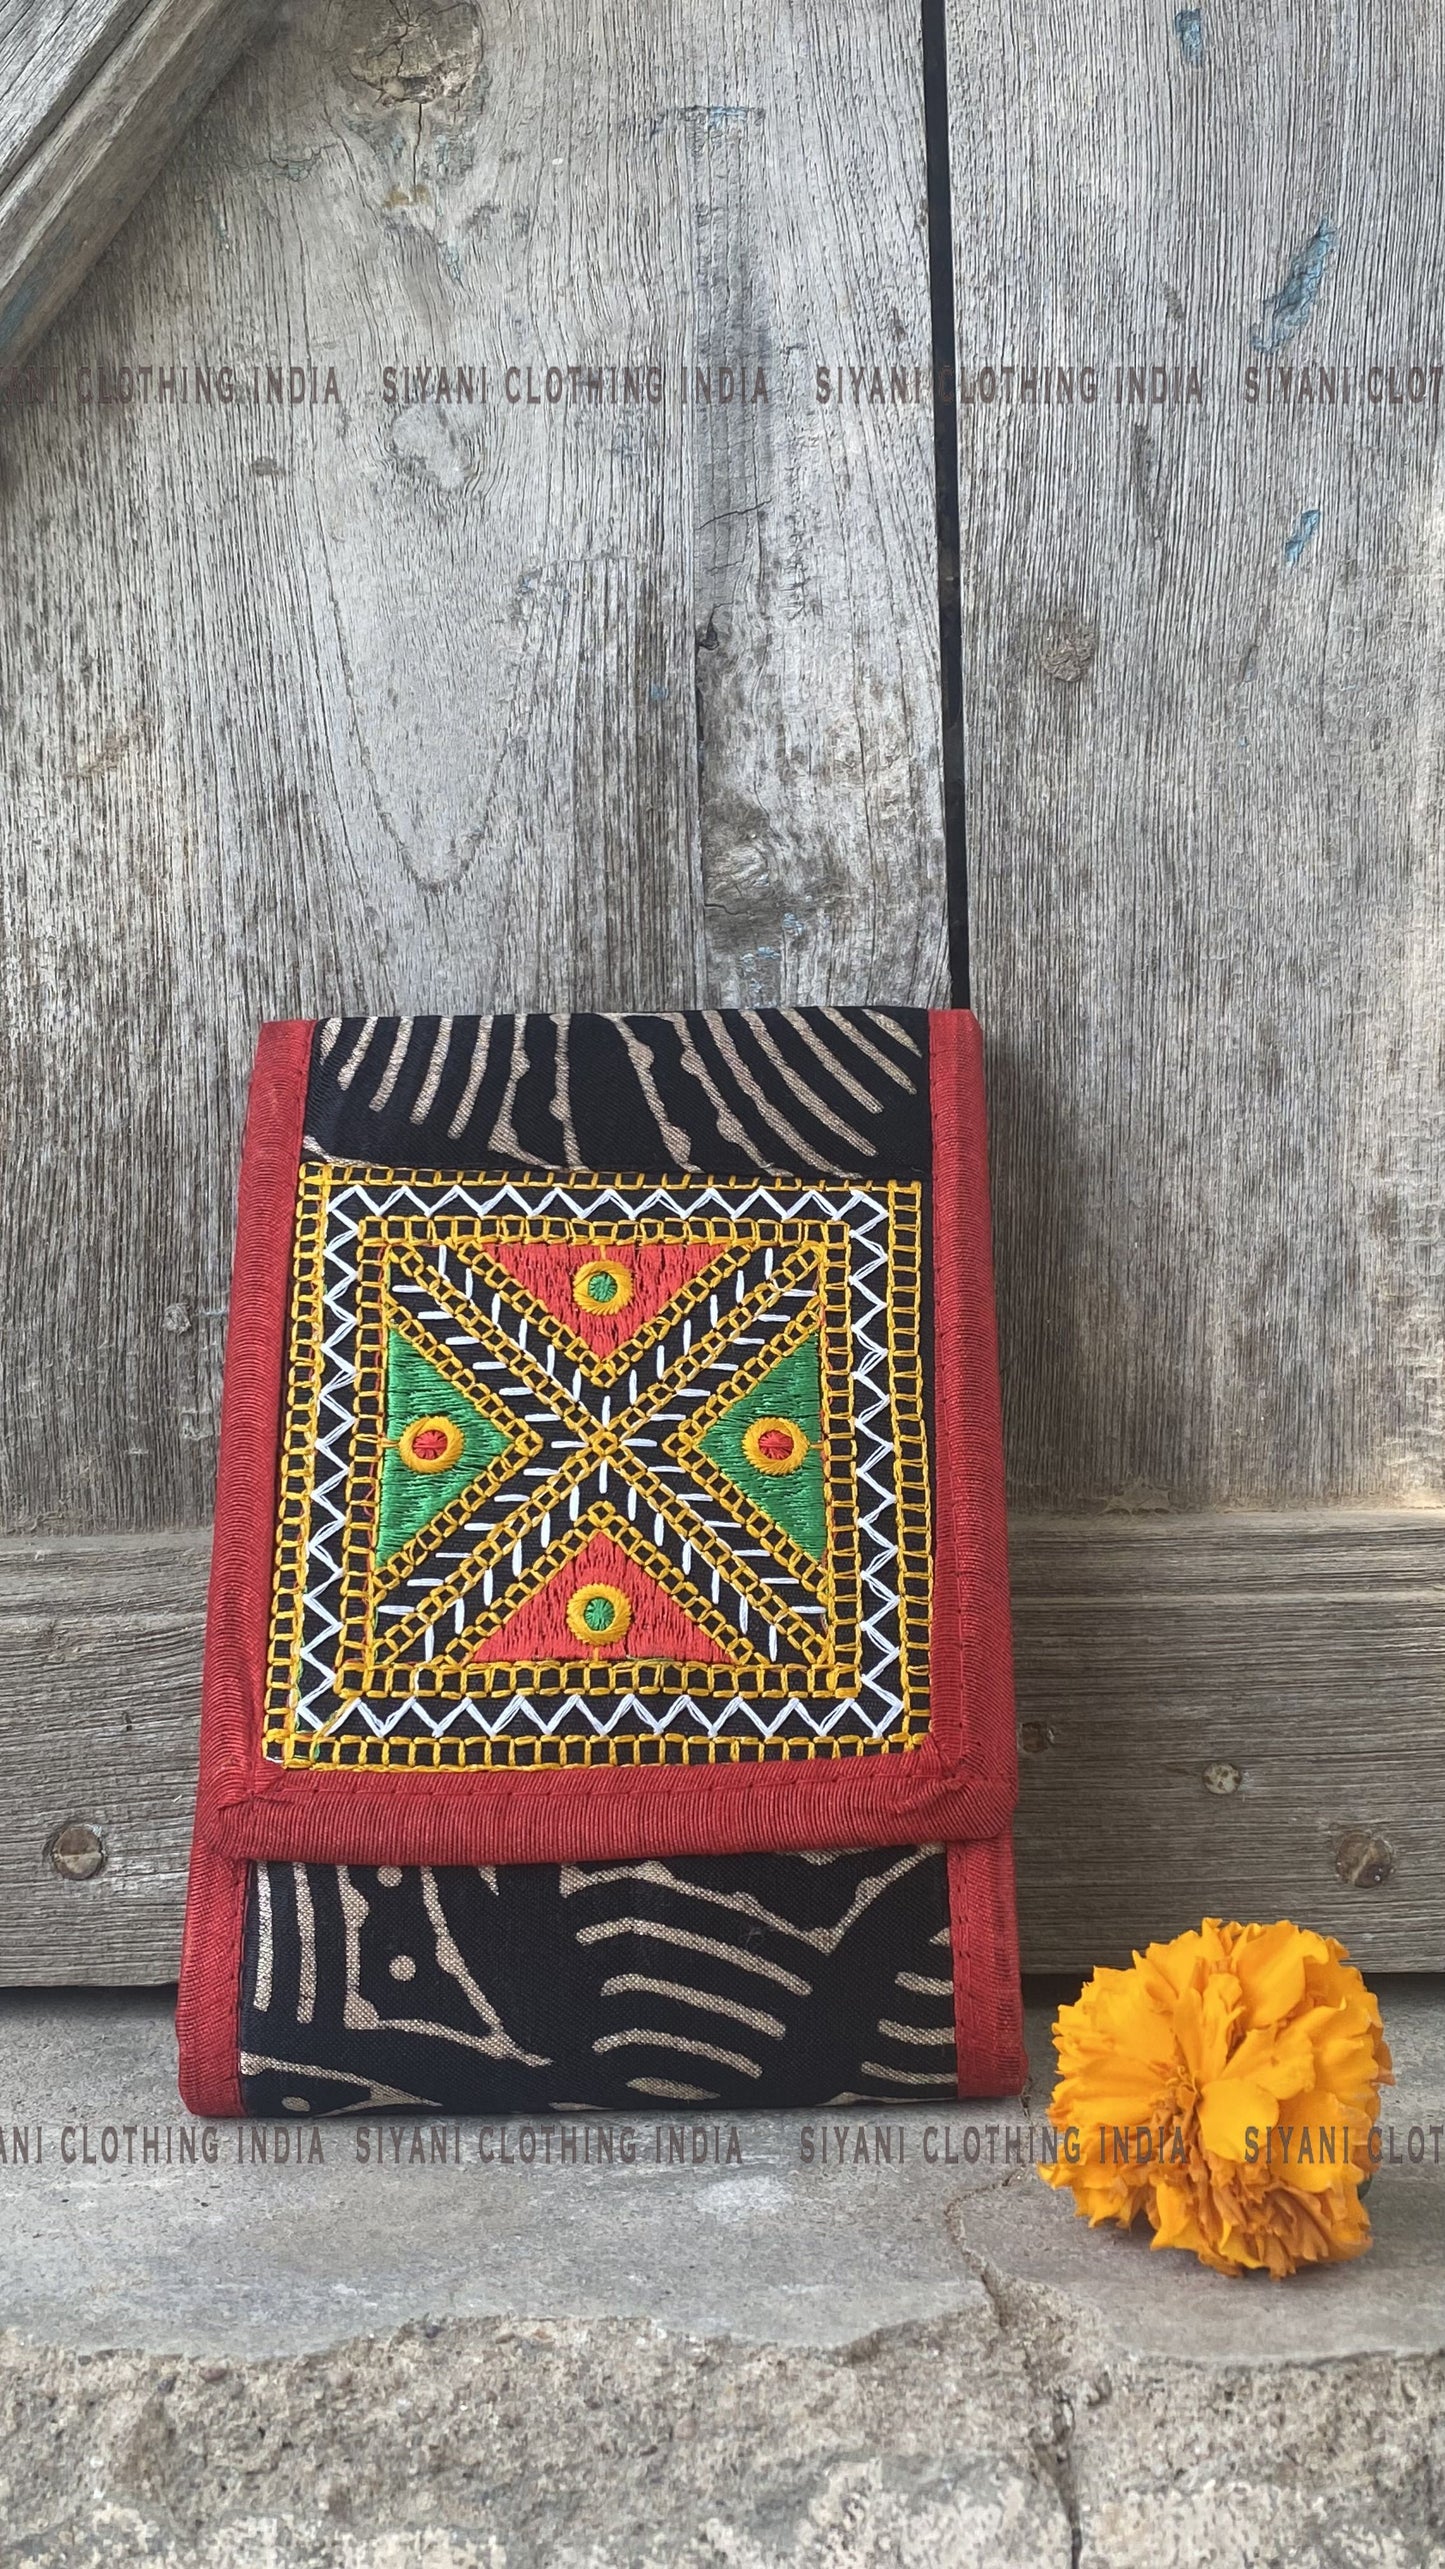 Siyani Black Thread Embroidered Handmade Tote Bag